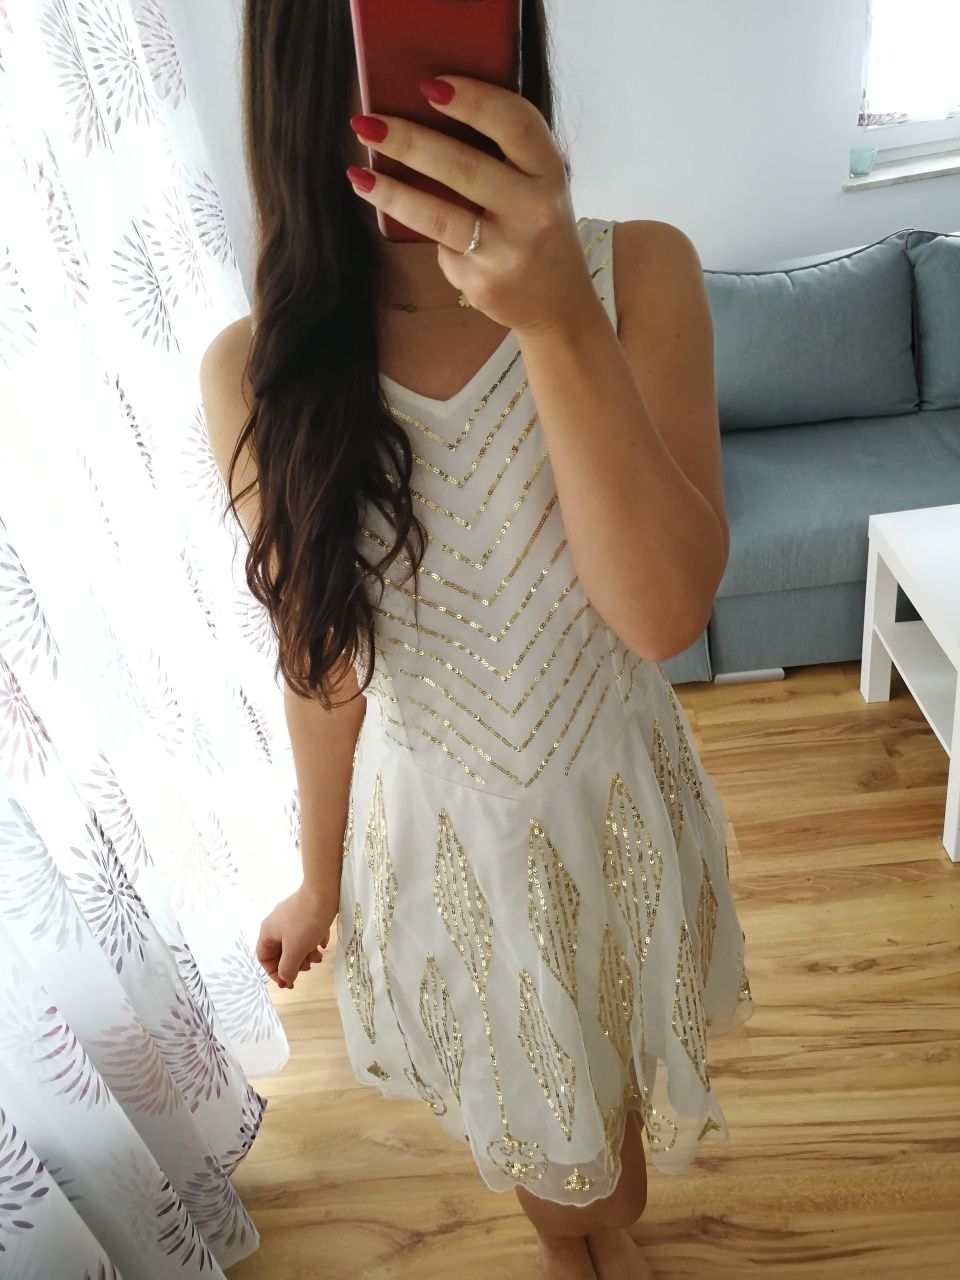 Kremowa sukienka cekinowa Cubus r. S, sukienka sylwestrowa